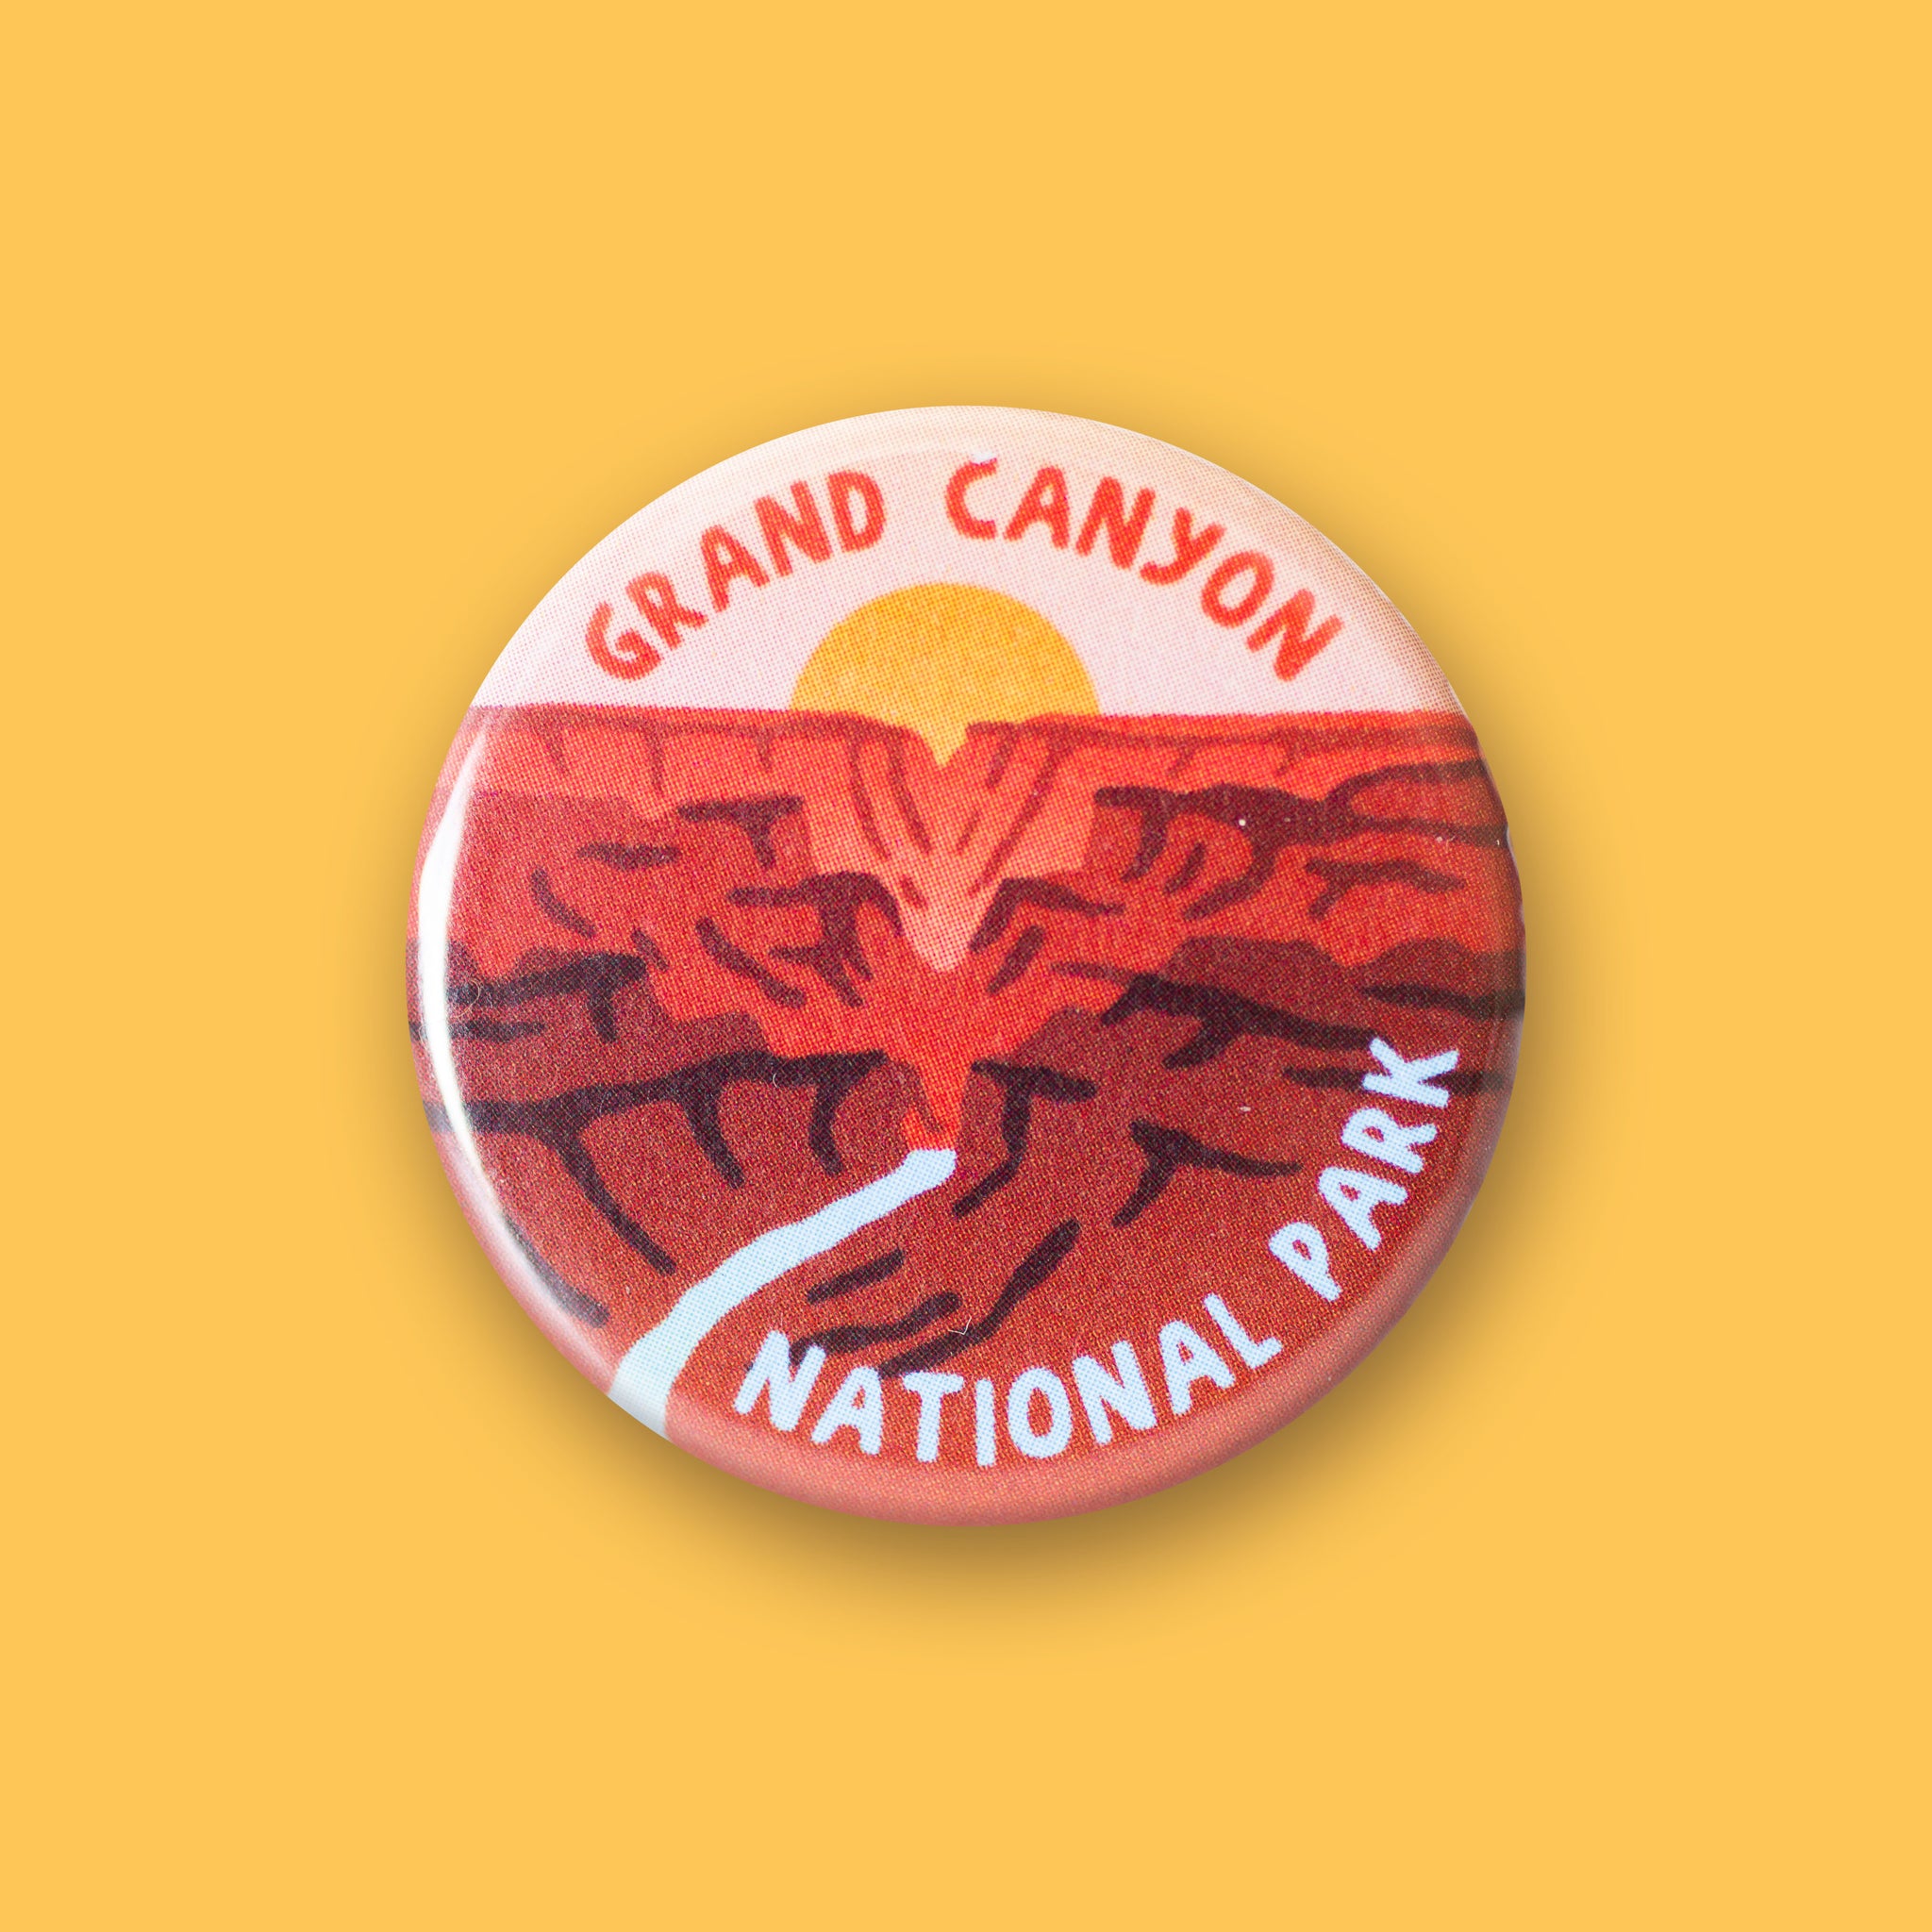 Grand Canyon National Park Merit Badge Button